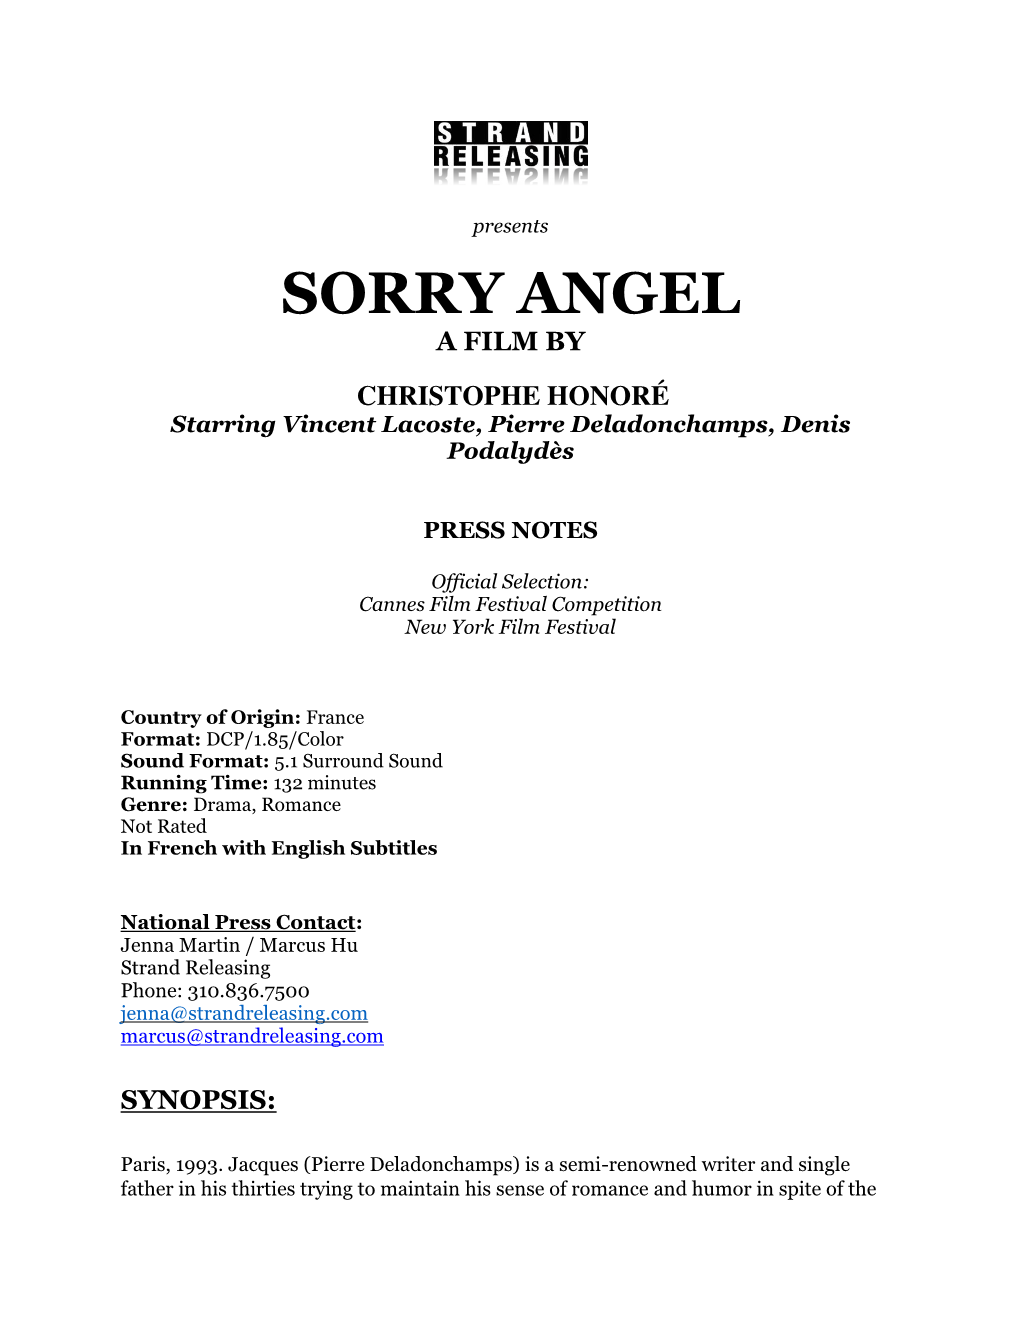 Sorry Angel a Film By